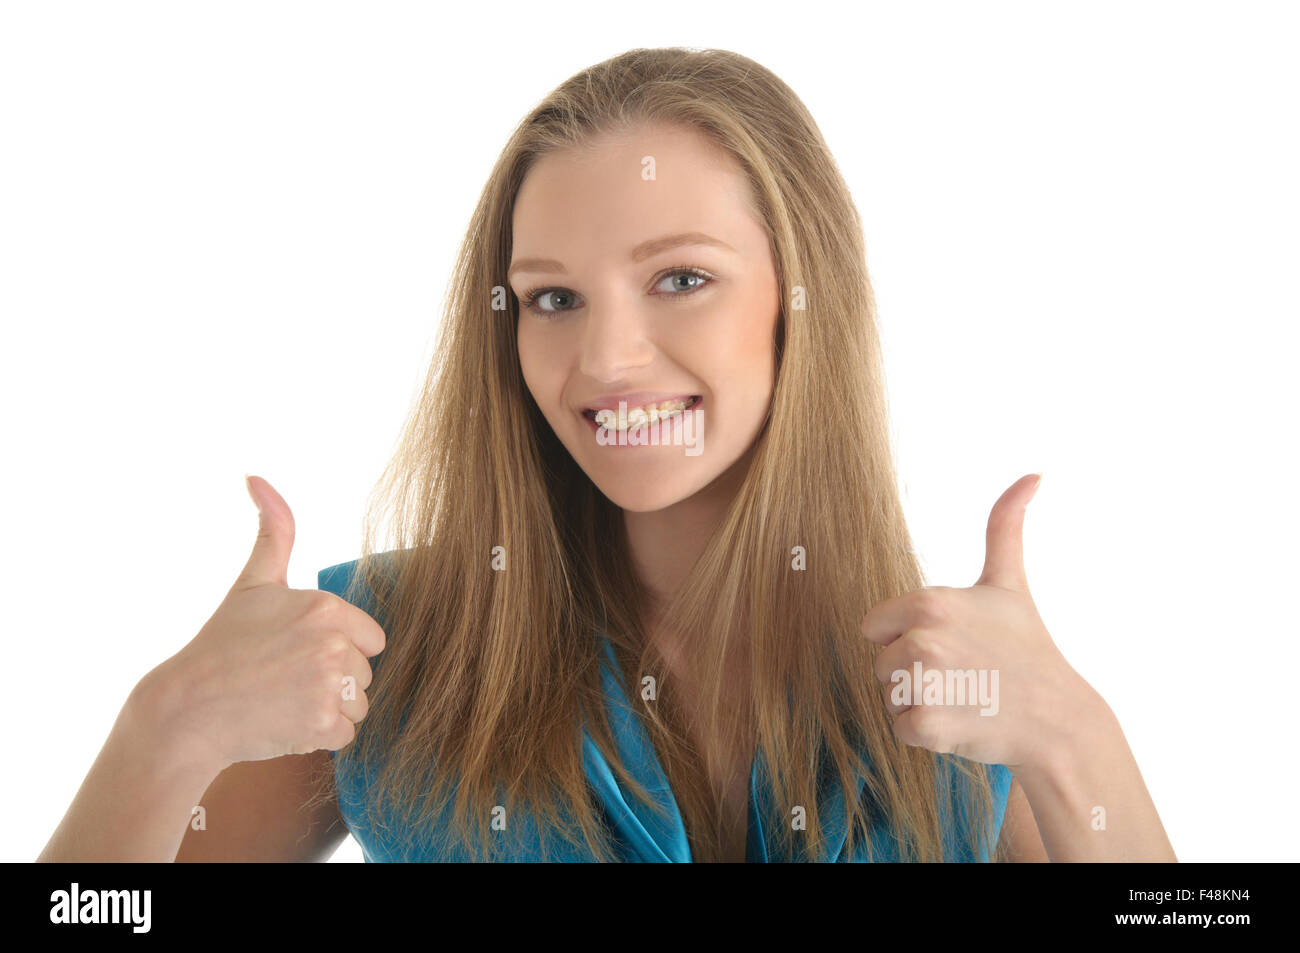 Woman with brackets on teeth Stock Photo